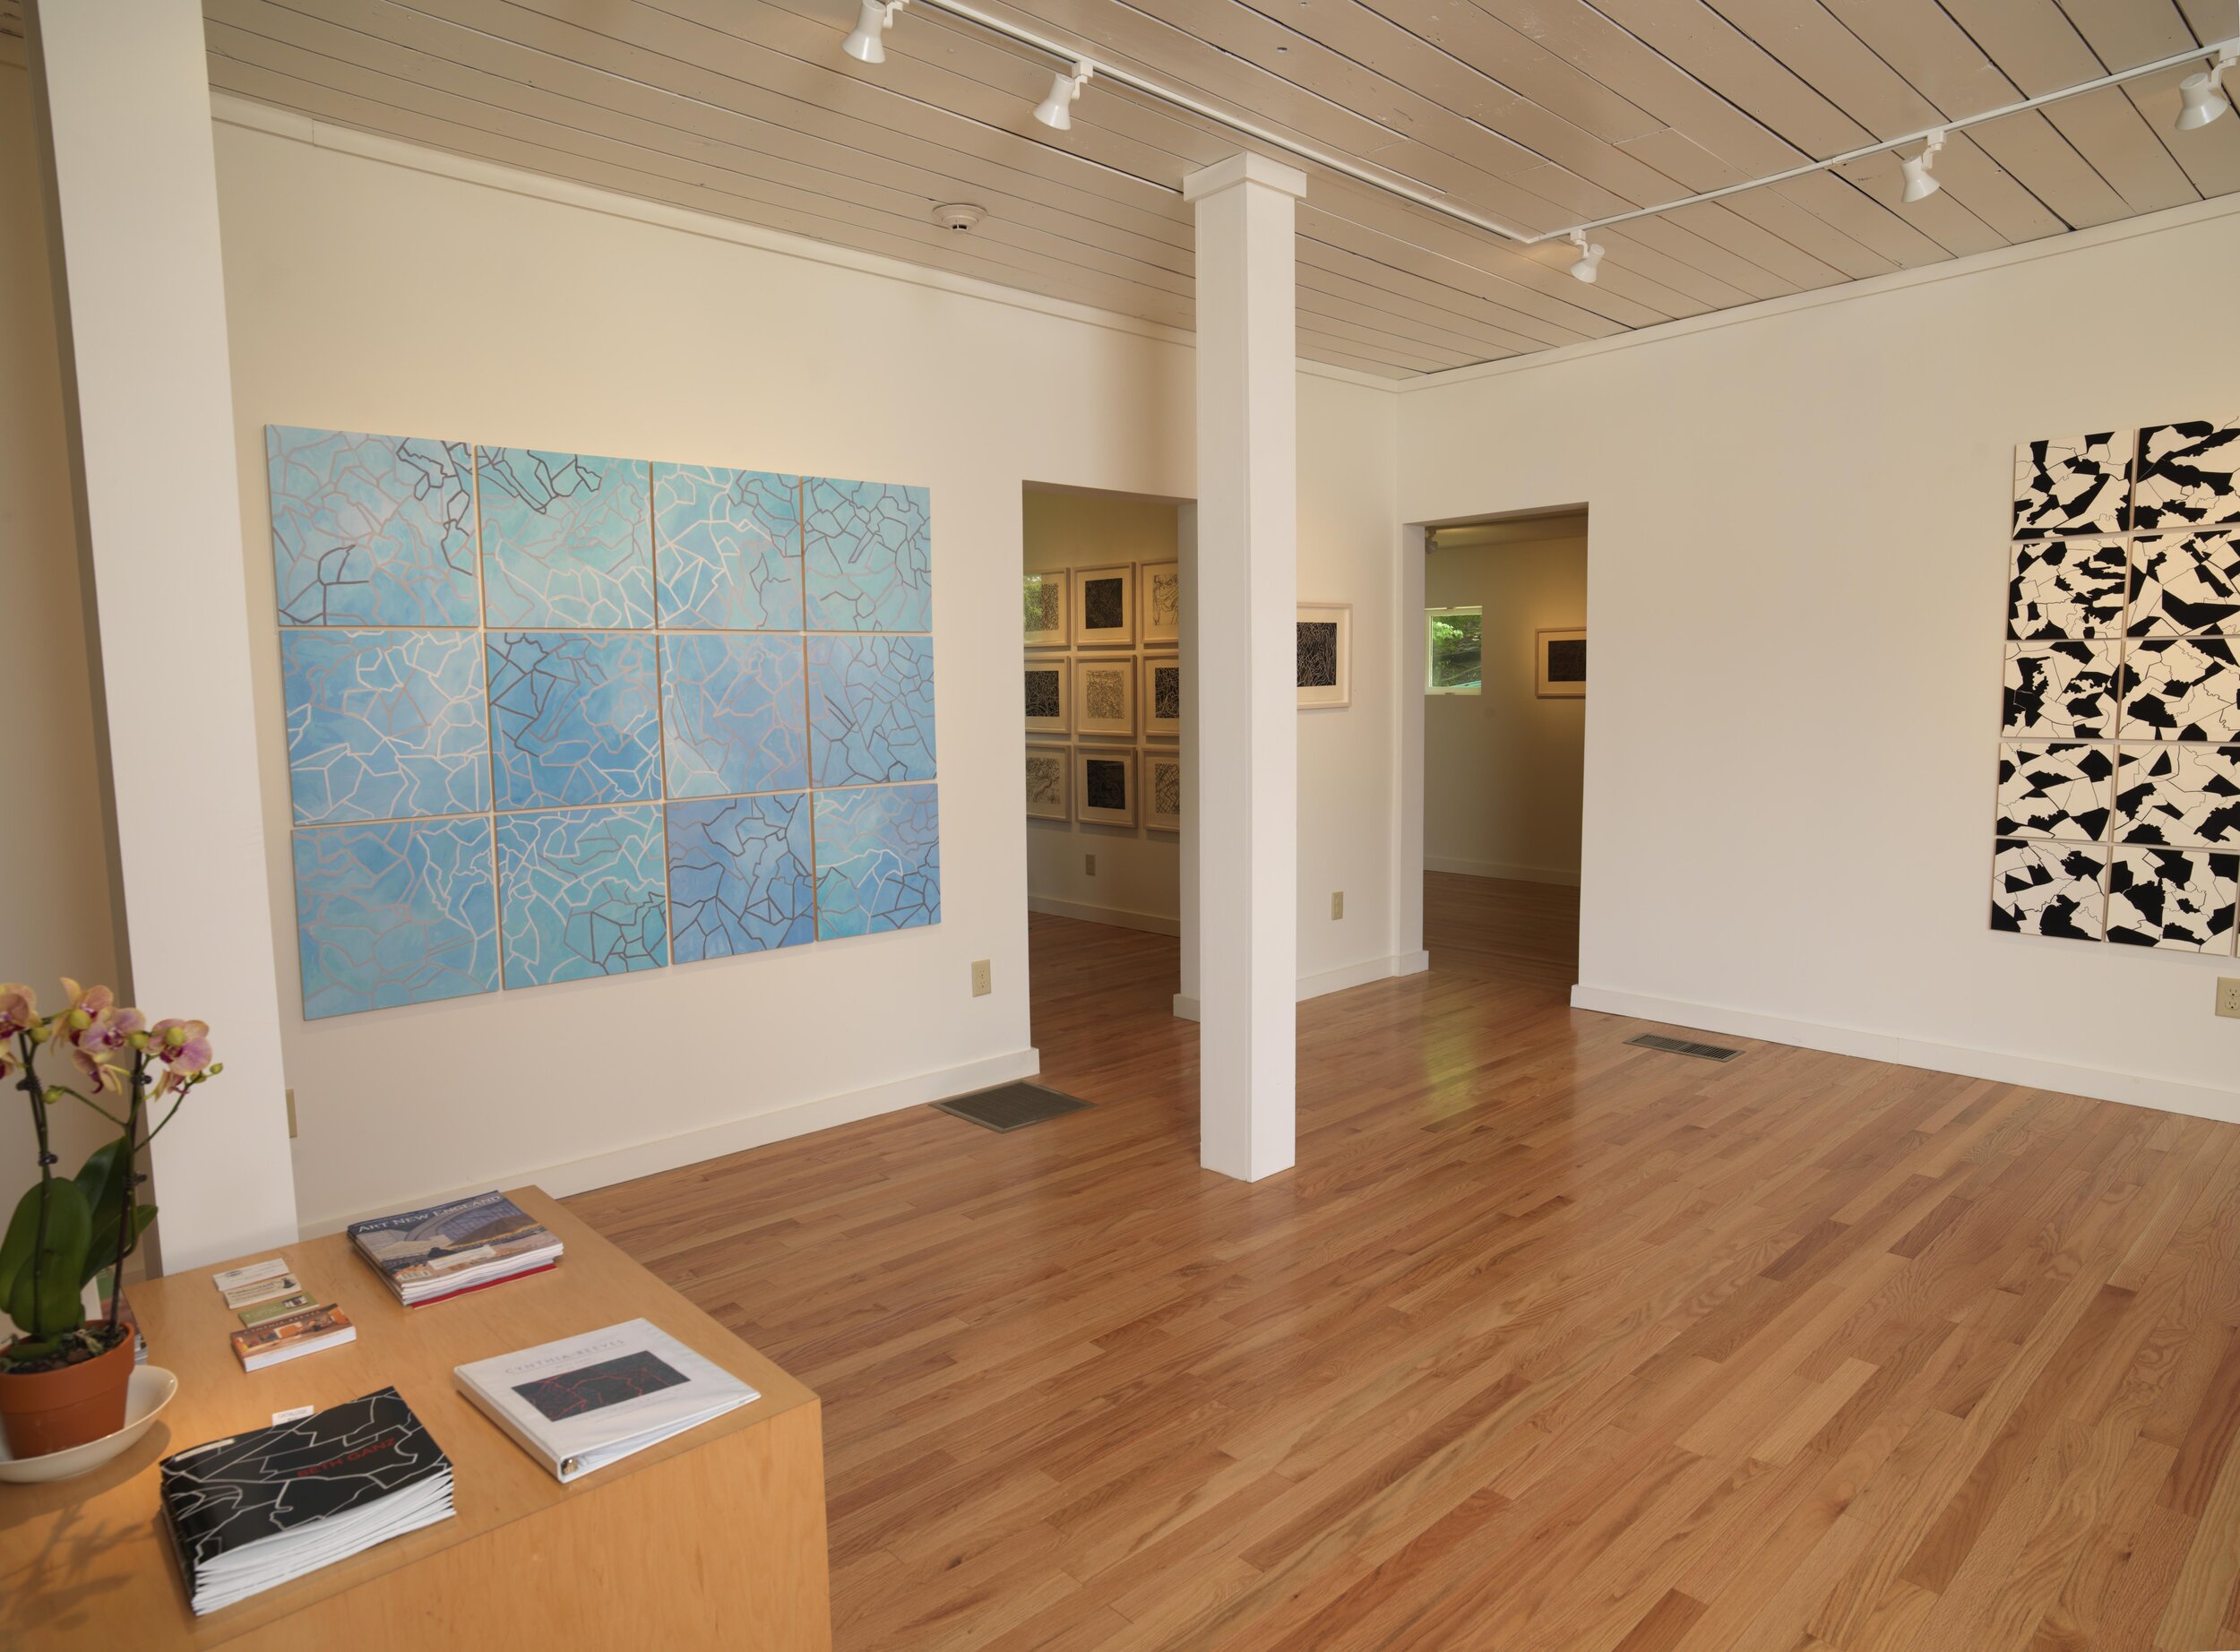    Grids Exhibiton, 2015   Cynthia Reeves Gallery WaIpol, New Hampshire 